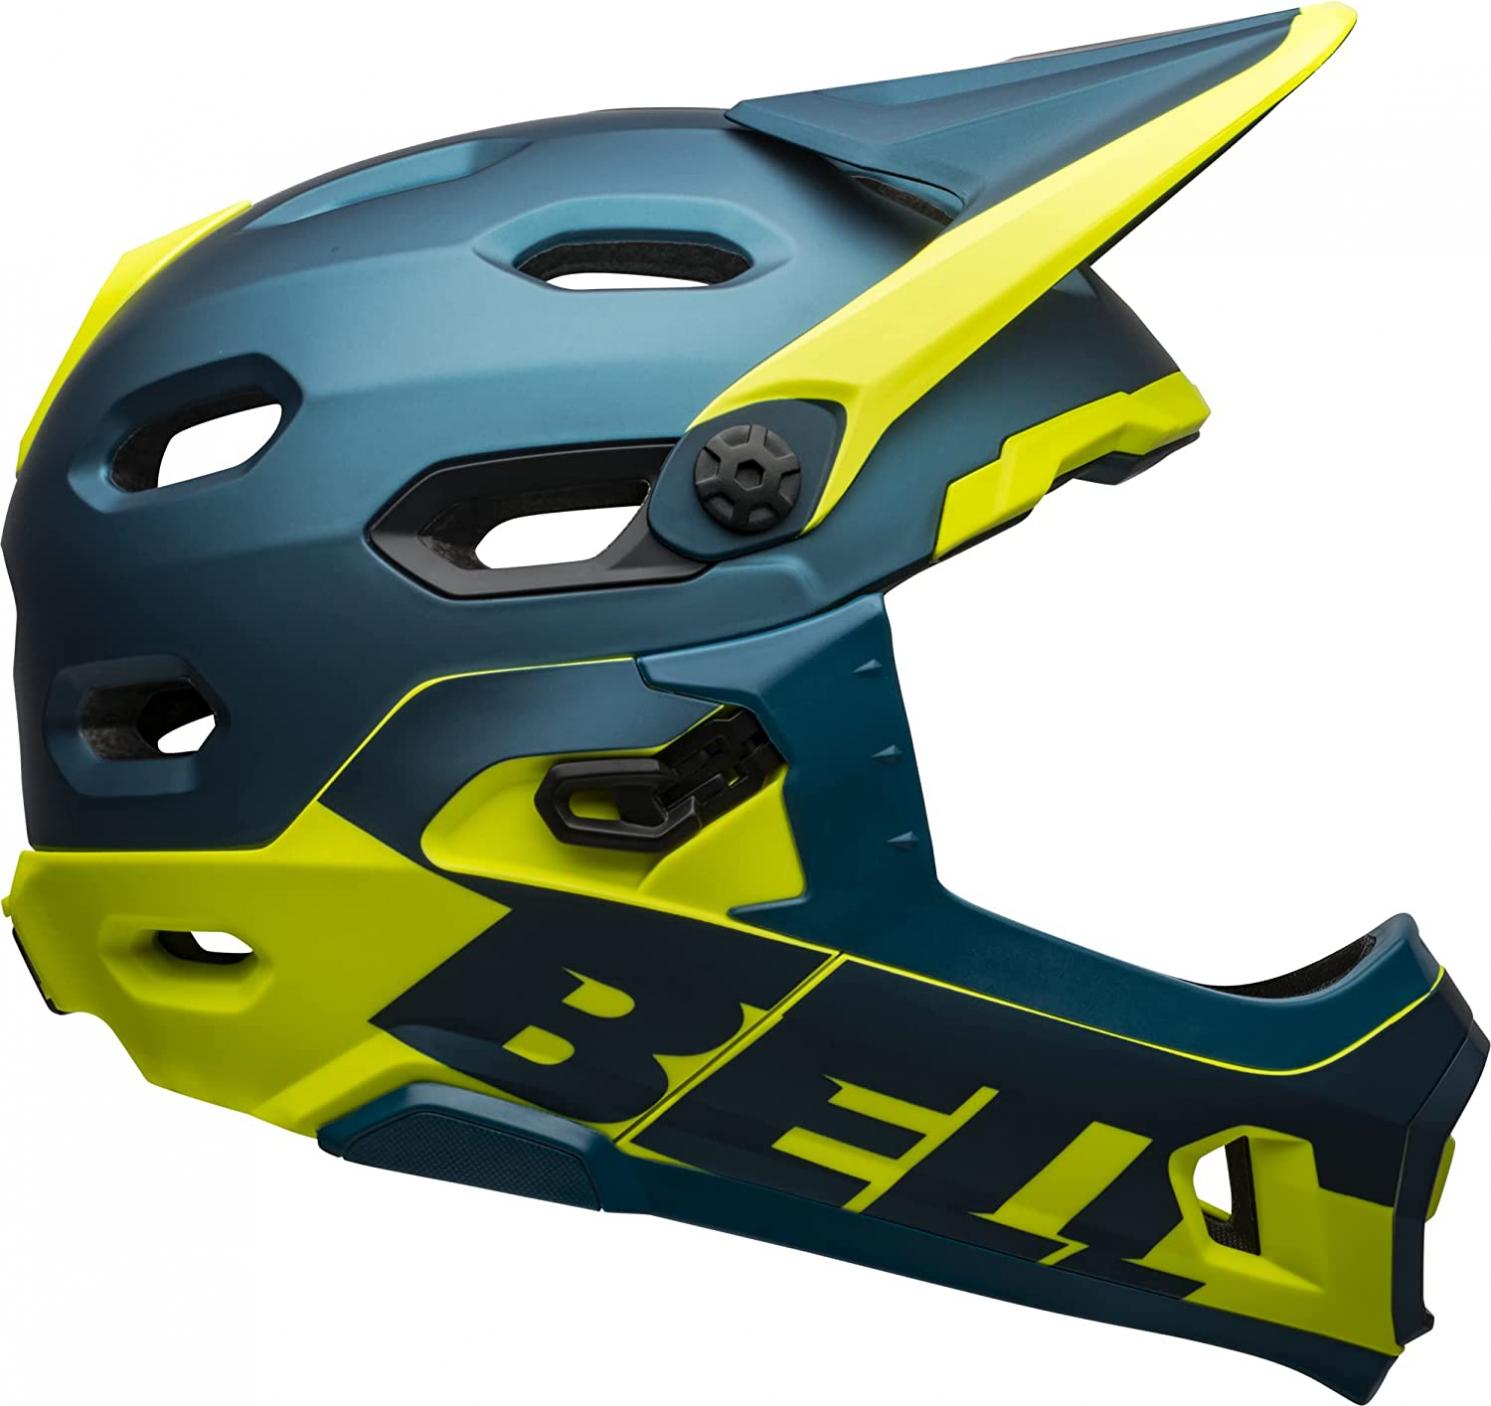 BELL Super DH MIPS Adult Mountain Bike Helmet